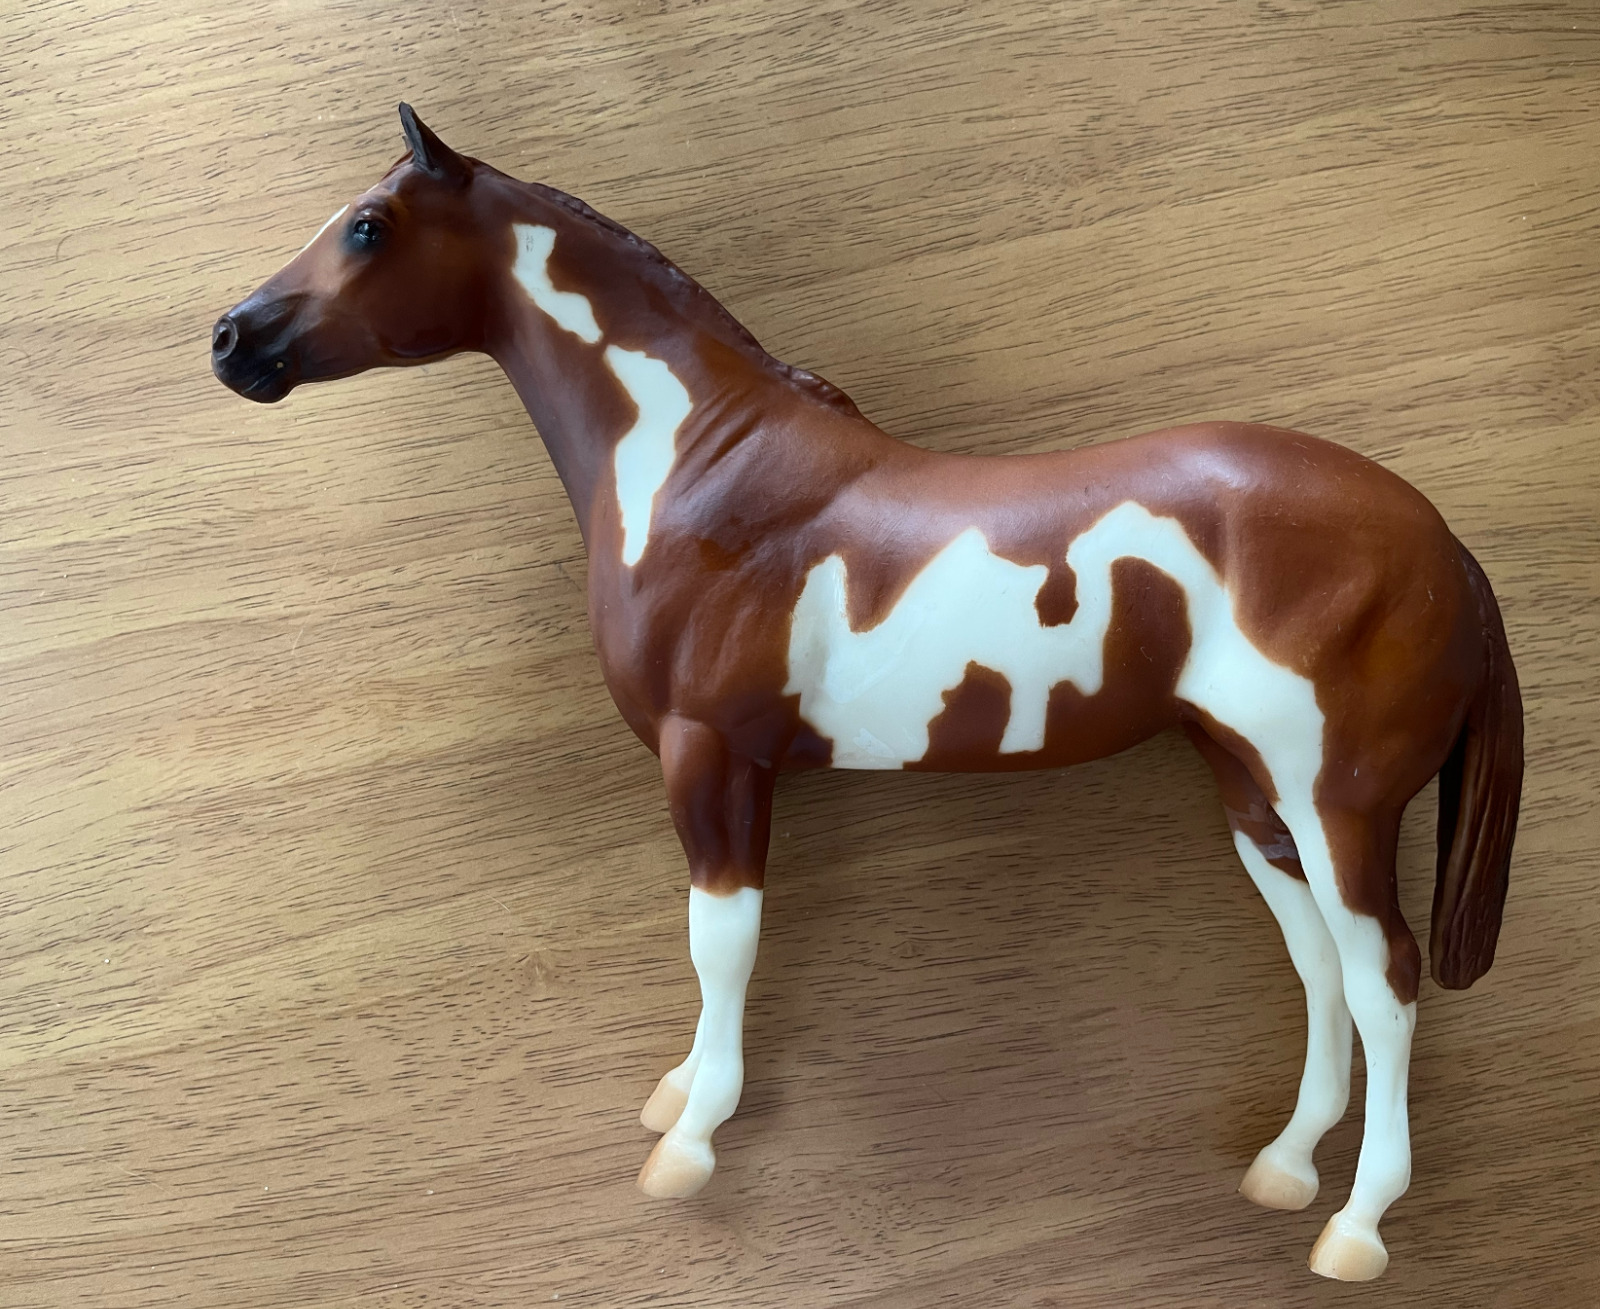 Breyer horse chestnut sorrel paint mare #771 on lady phase mold